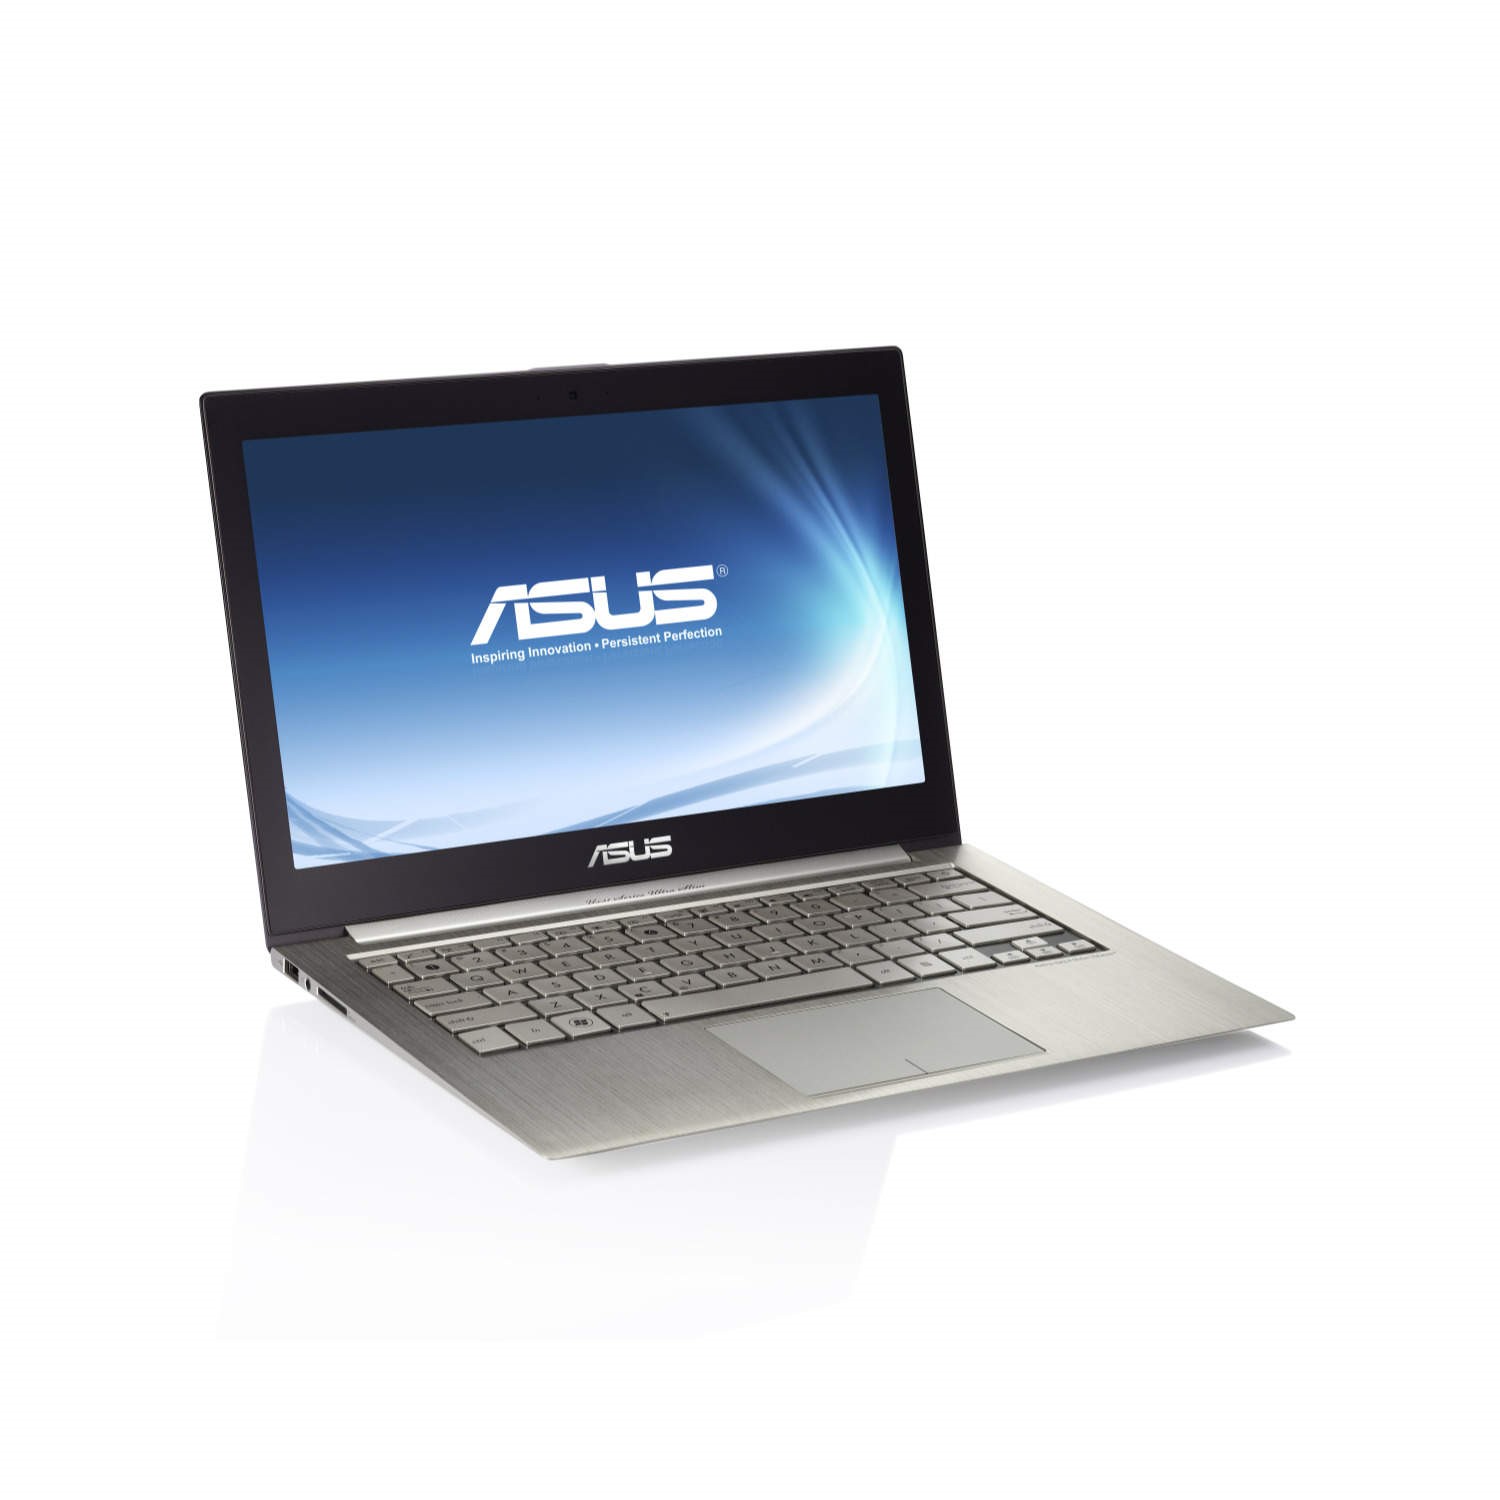 Refurbished Grade A1 Asus ZENBOOK UX31A Core i5 4GB 128GB SSD 13.3 inch  Windows 8 Ultrabook